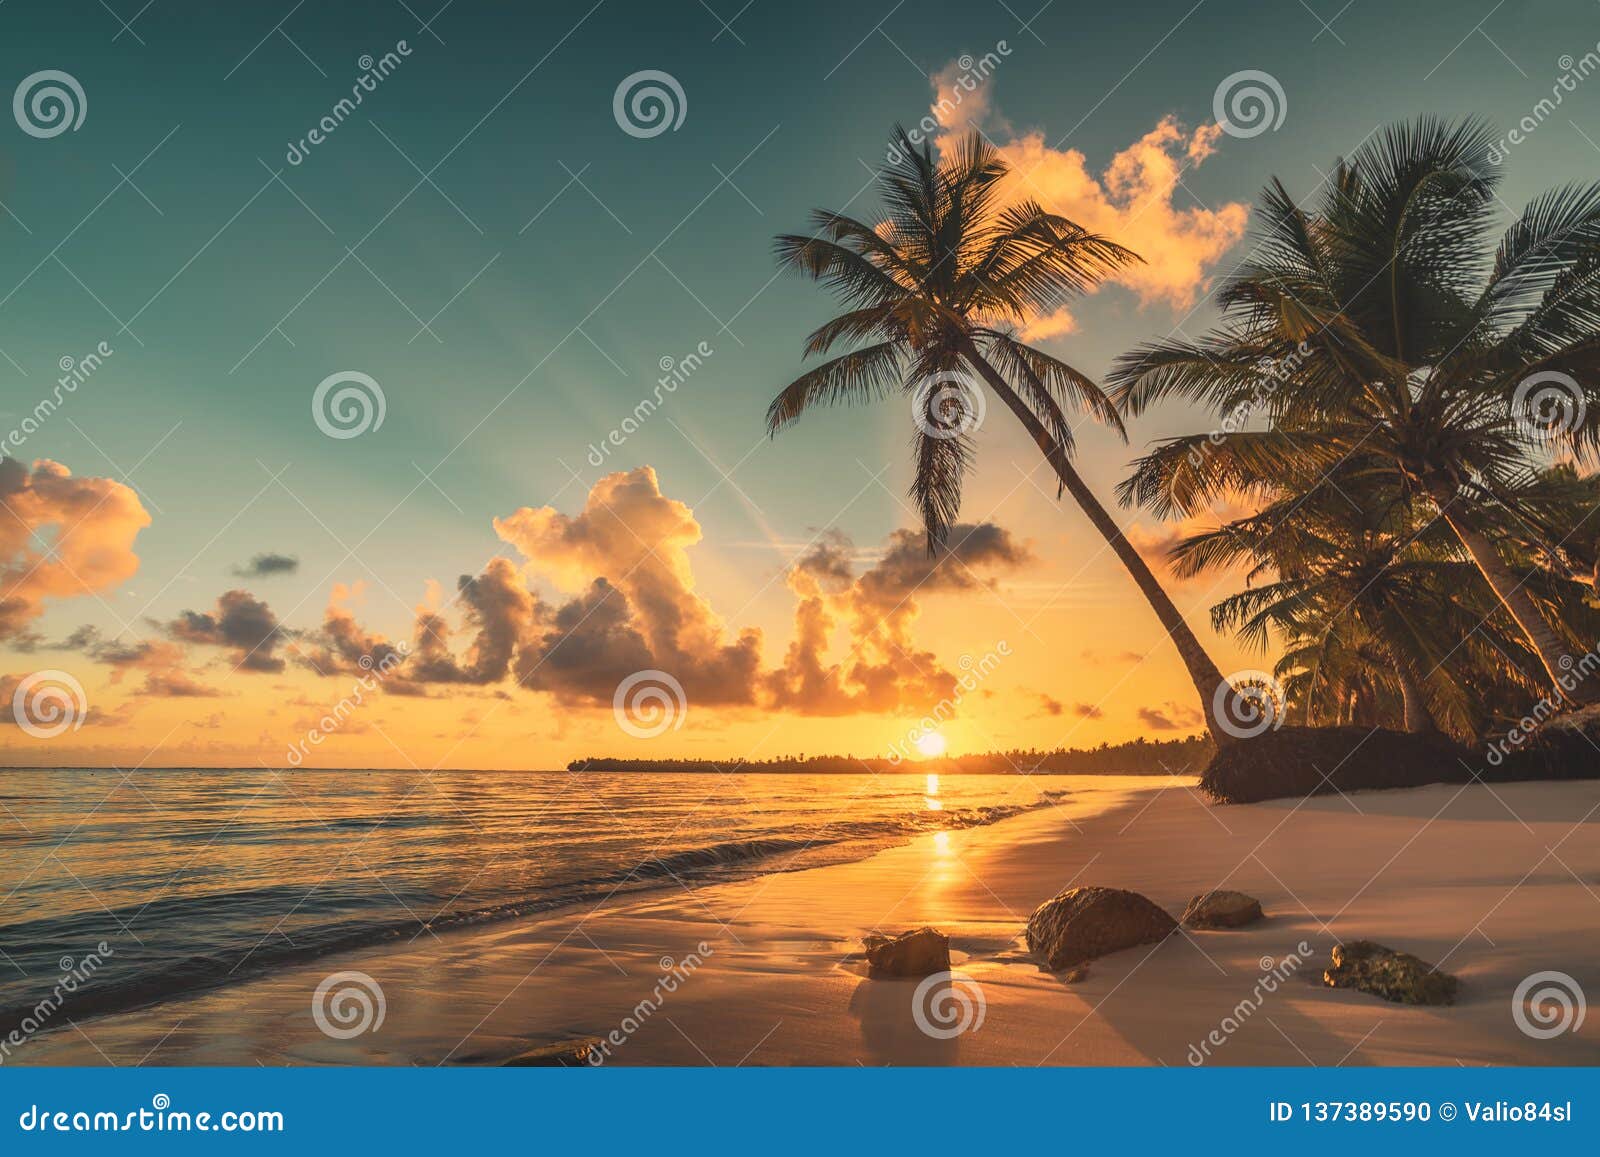 tropical beach in punta cana, dominican republic. sunrise over exotic island in the ocean.